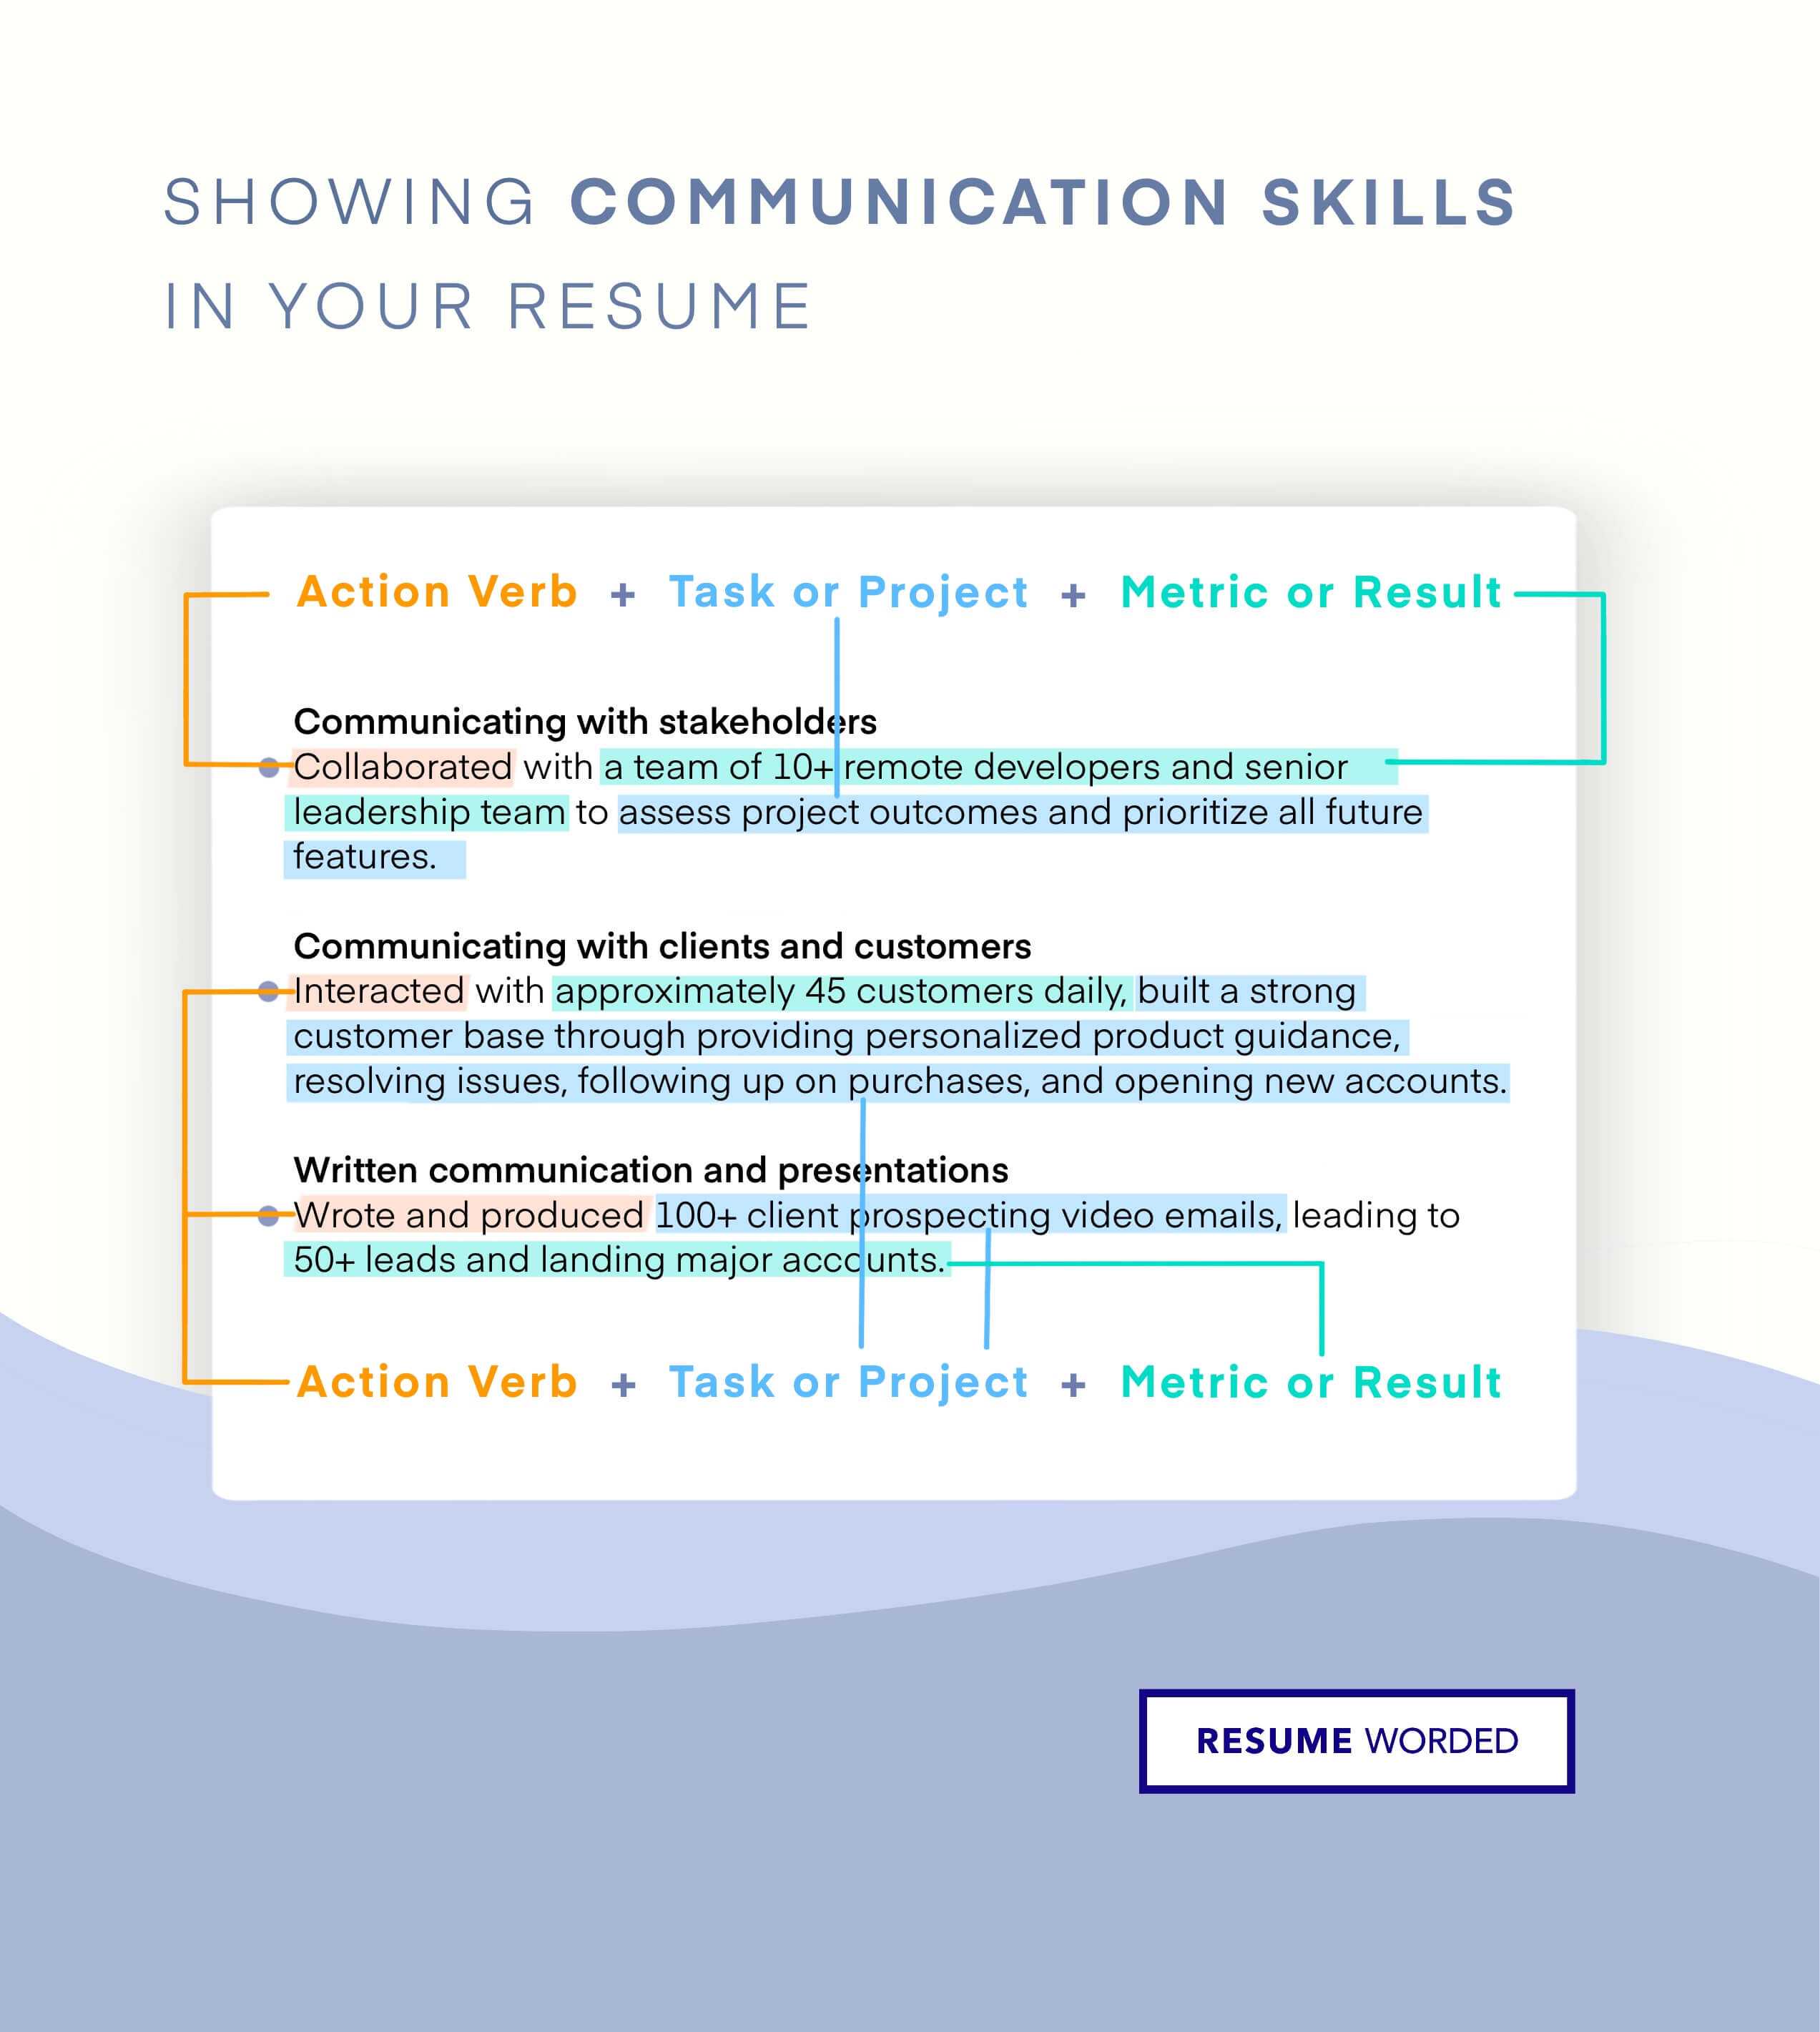 Prove your communication skills - Service Desk Analyst CV